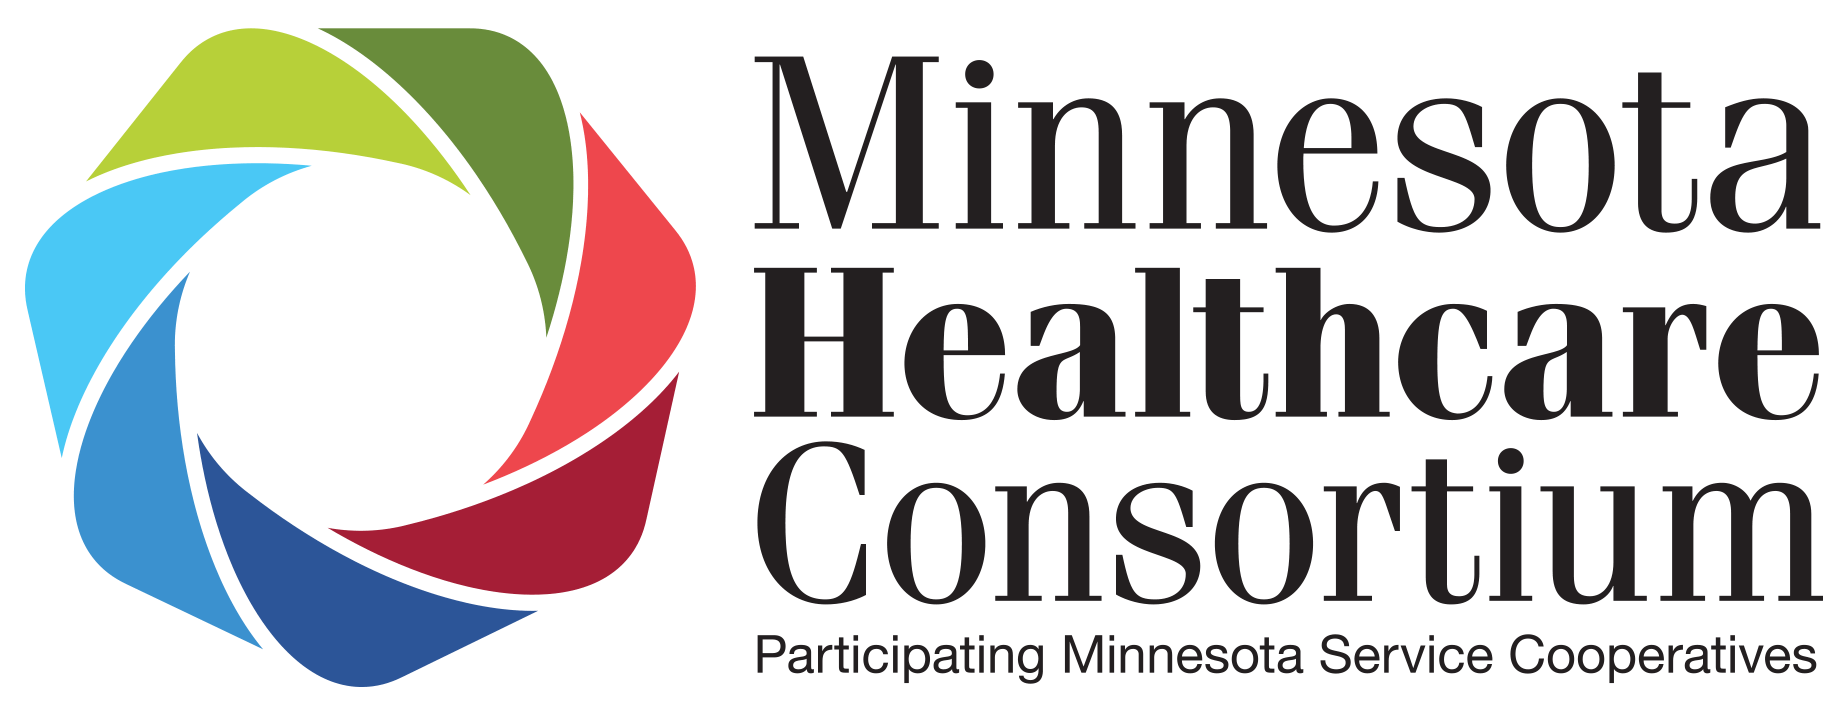 Minnesota Healthcare Consortium